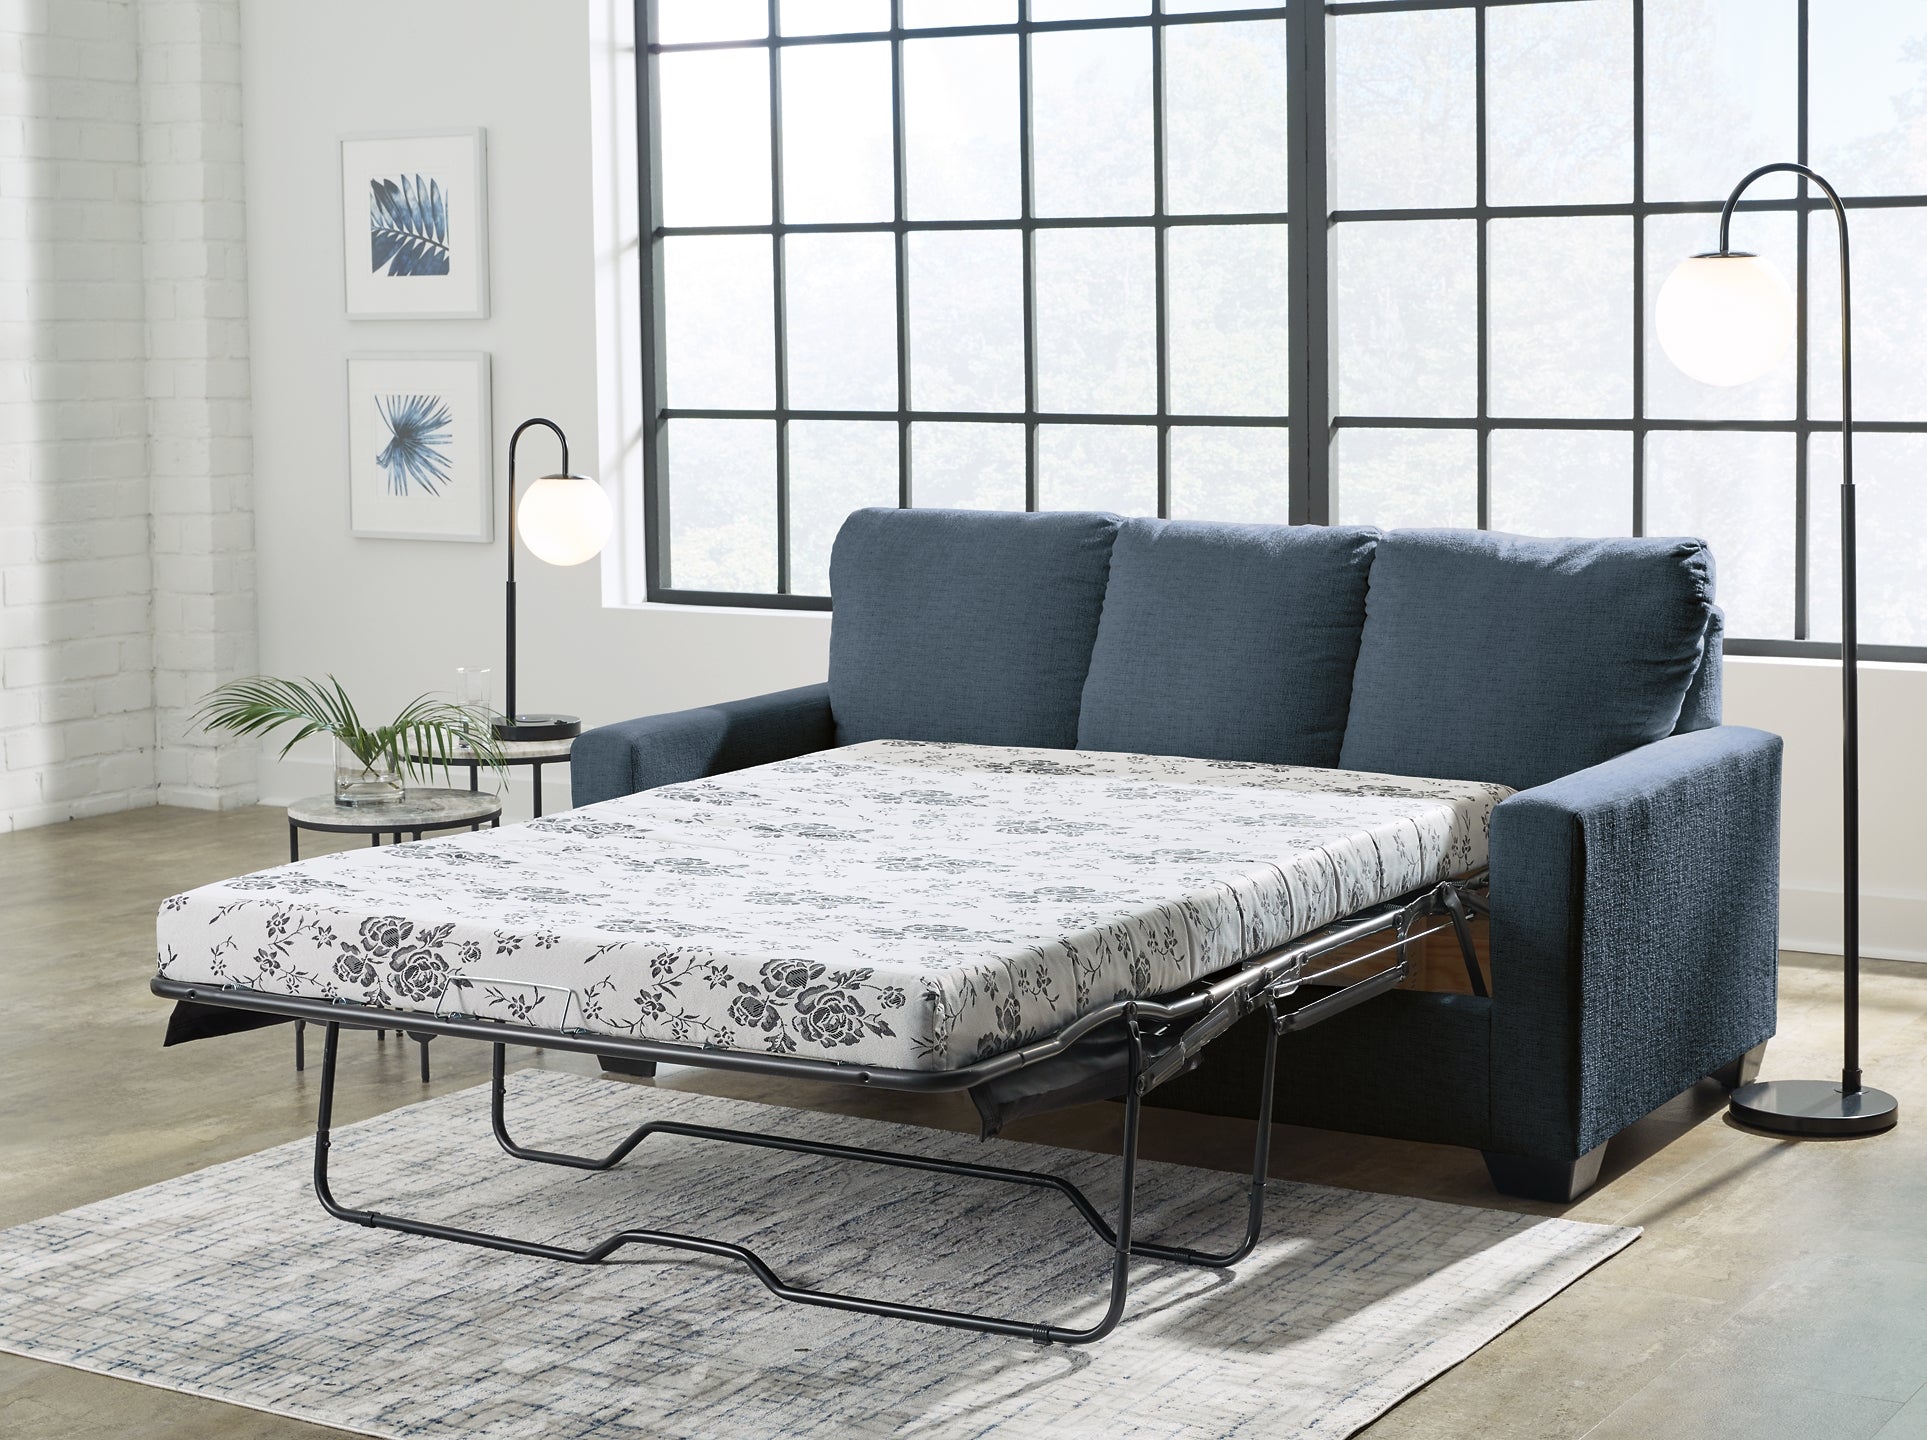 Rannis Full Sofa Sleeper JB's Furniture  Home Furniture, Home Decor, Furniture Store